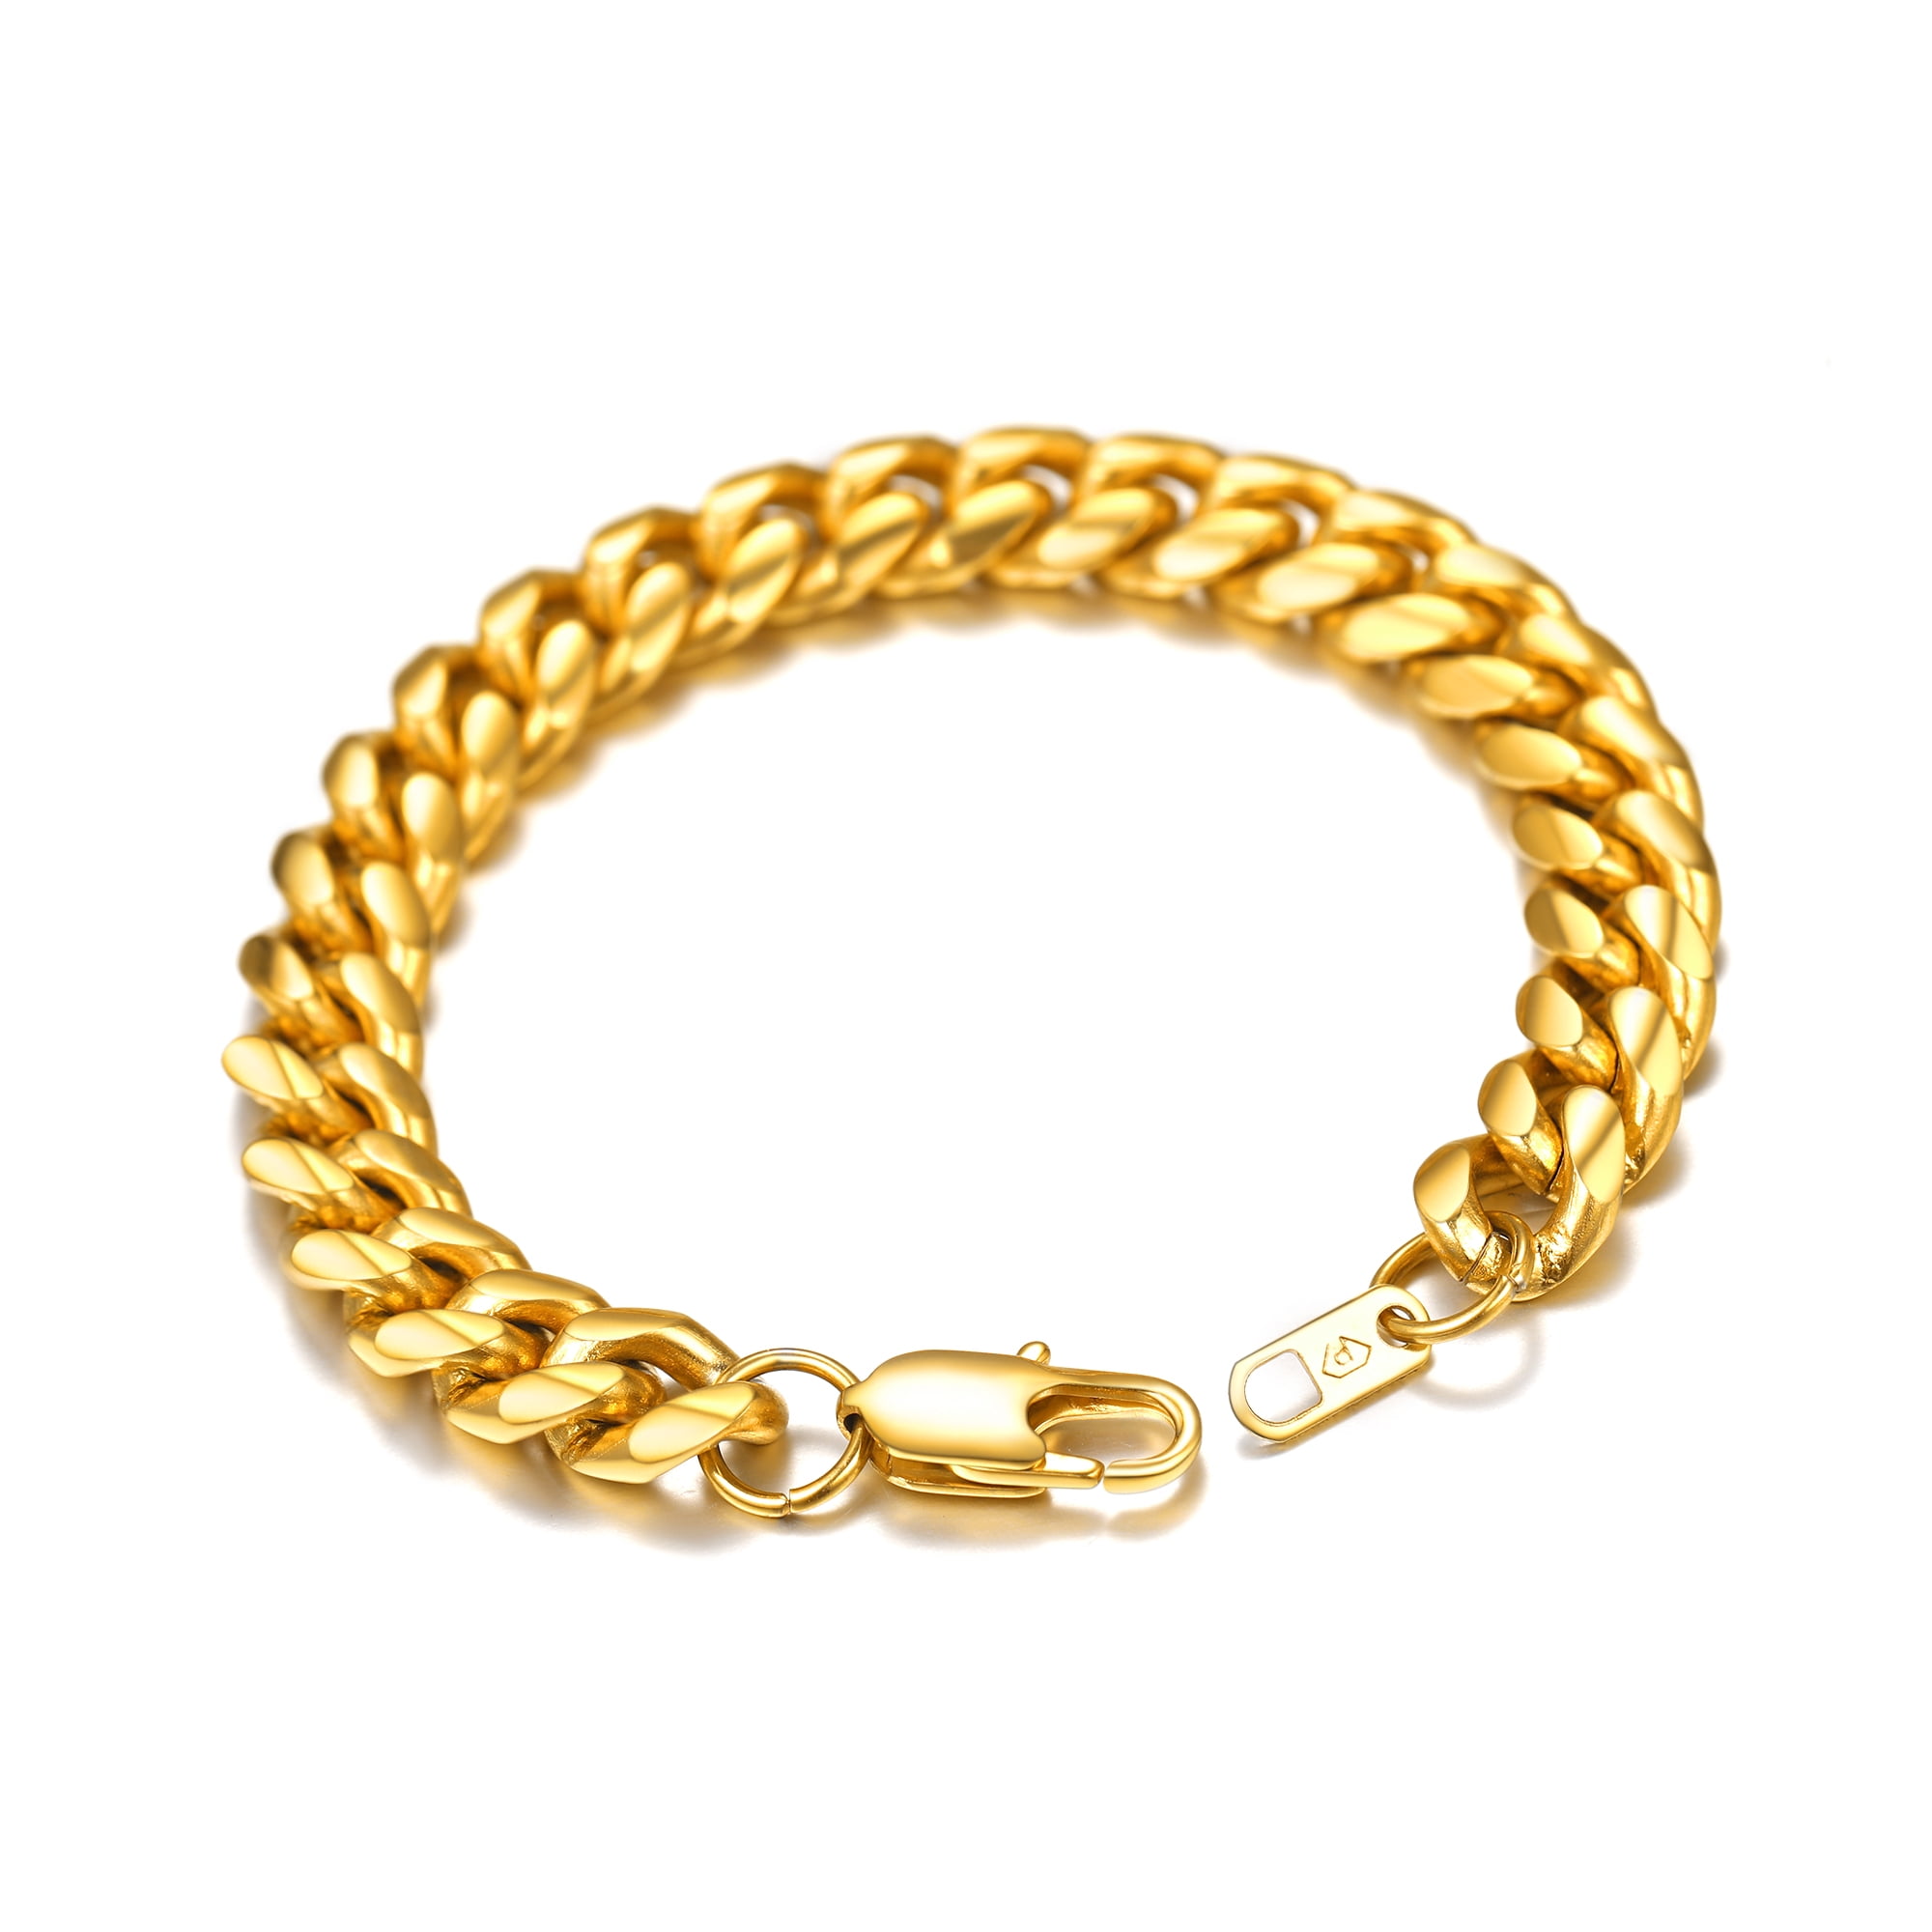 Buy ZIVOM® Multi Inter Links Rope Korean 18K Gold Plated Chain Bracelet For  Men at Amazon.in